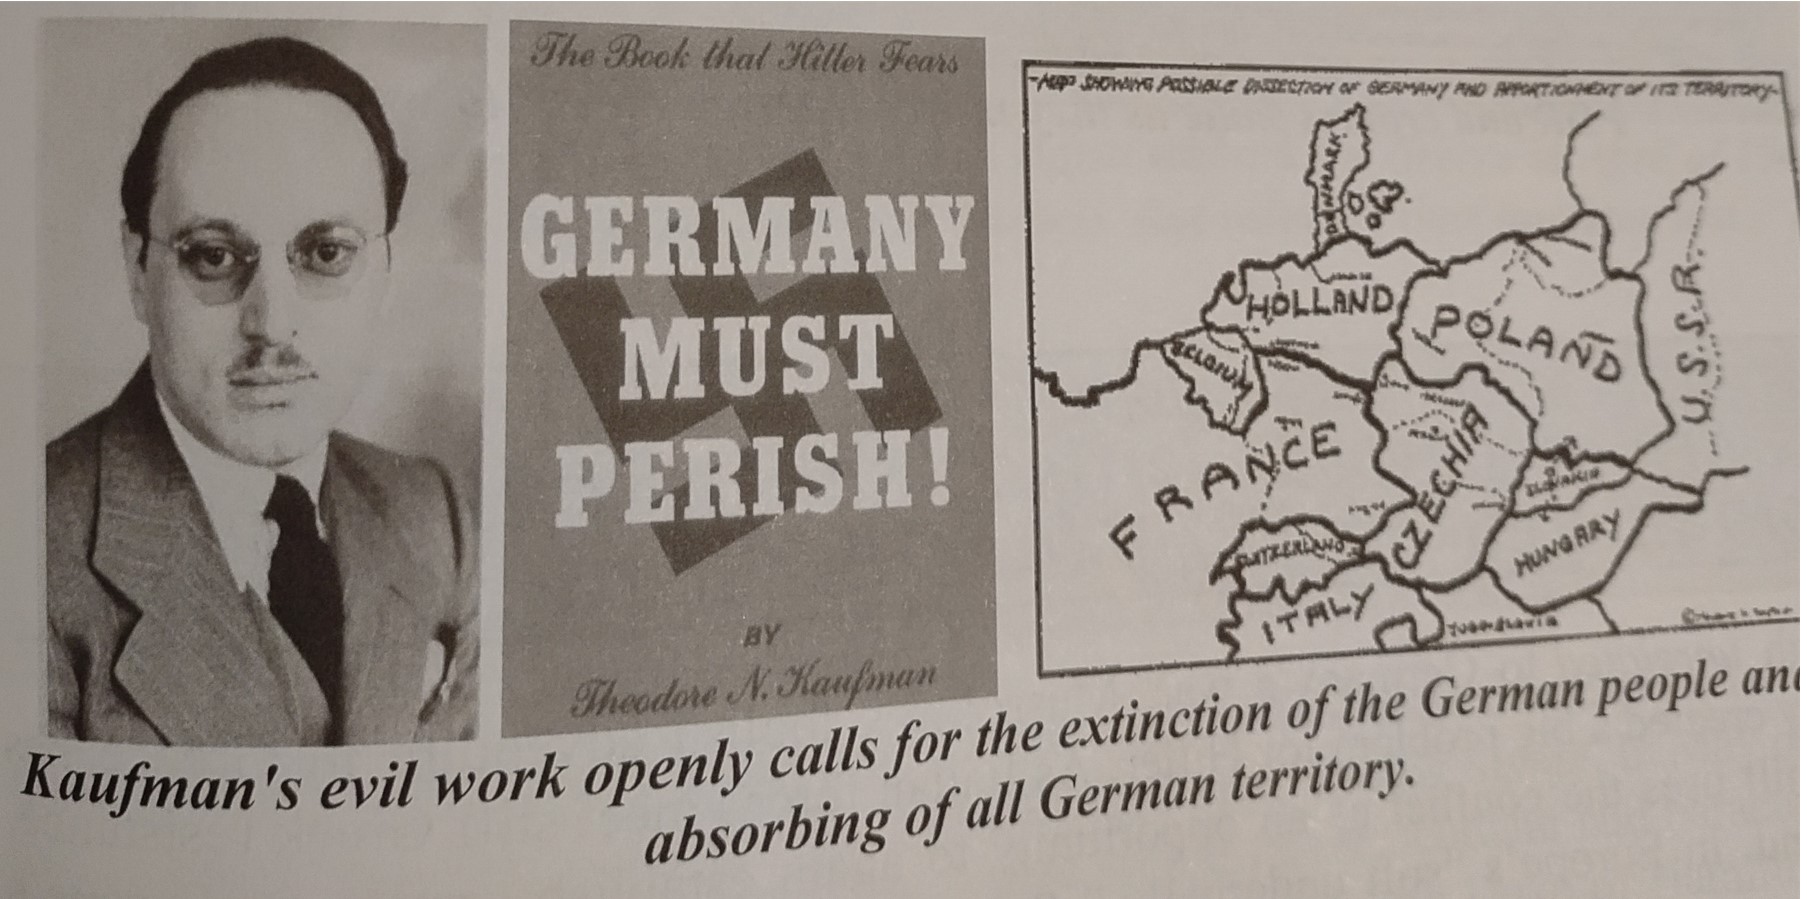 Germany Must Perish